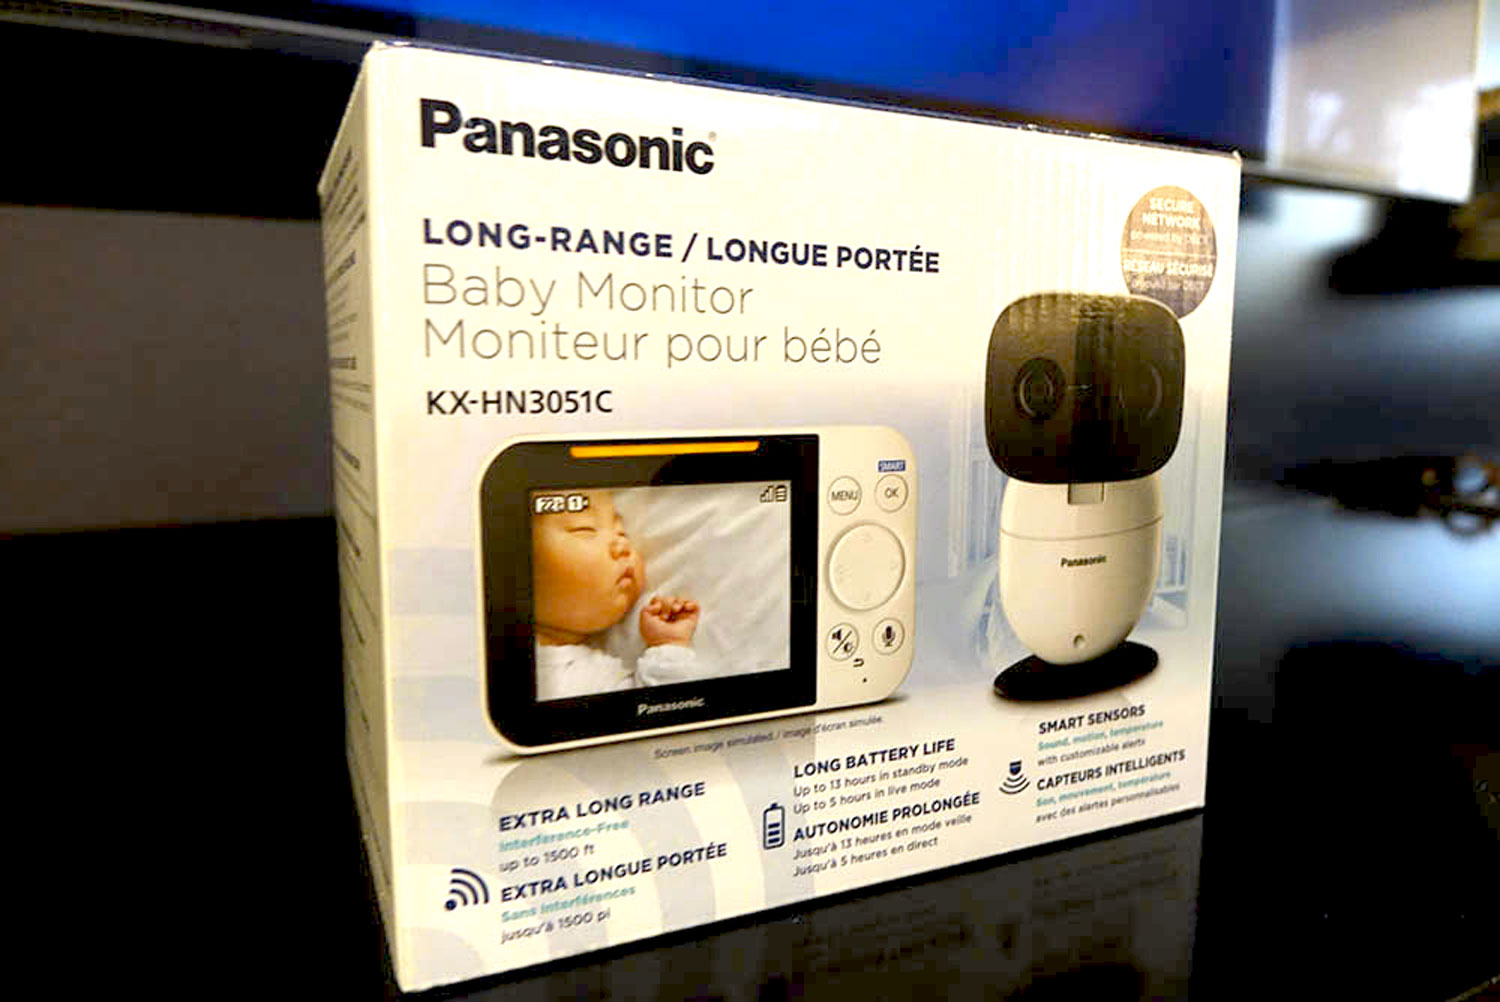 panasonic baby monitor review - Panasonic long-range baby monitor - box